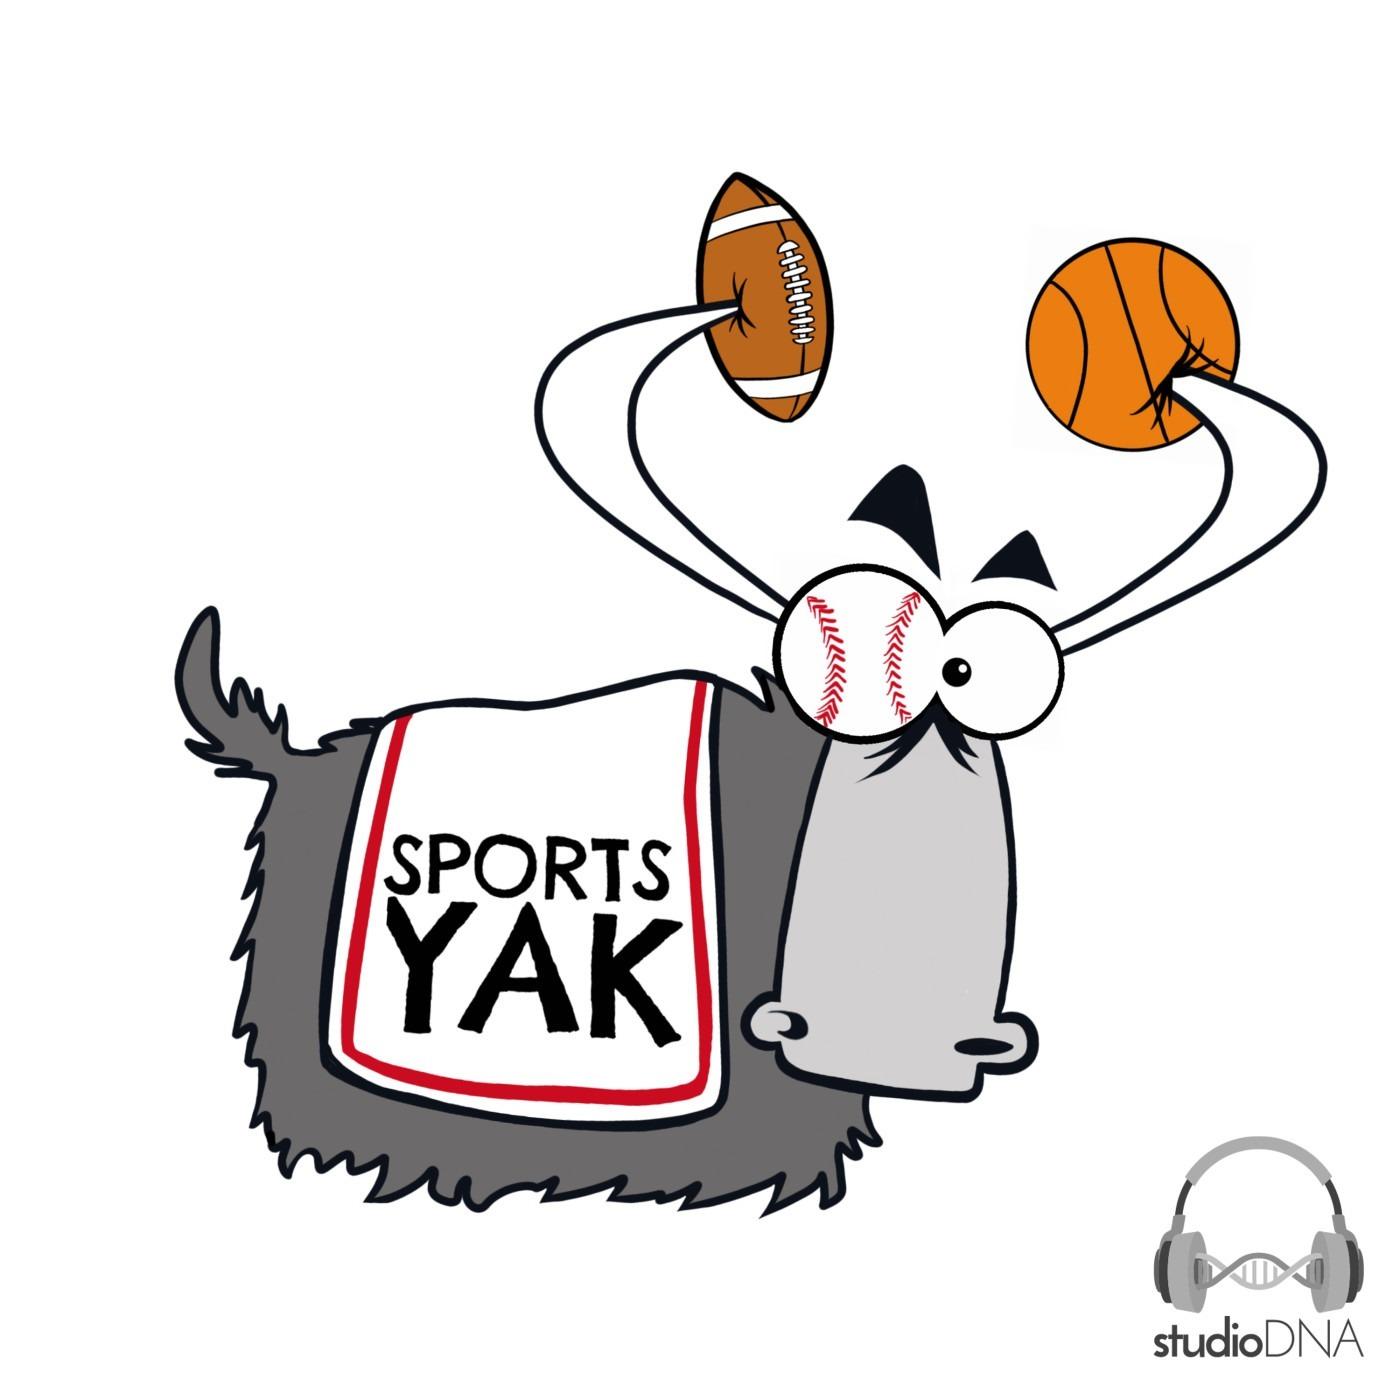 Sports Yak